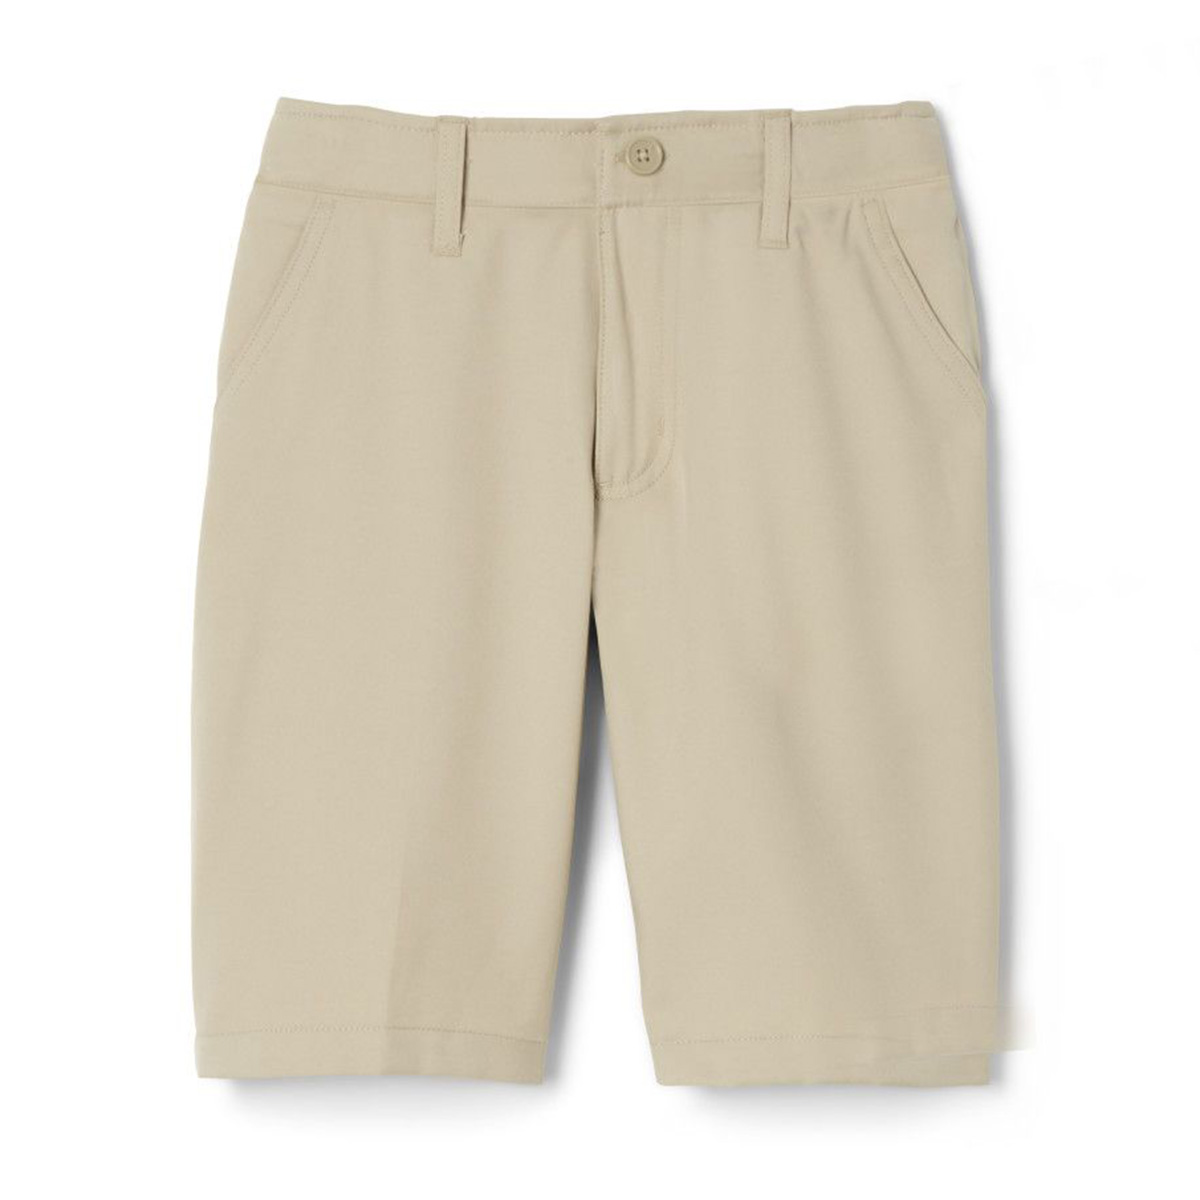 Boys (8-20) Flat Front Stretch Uniform Shorts